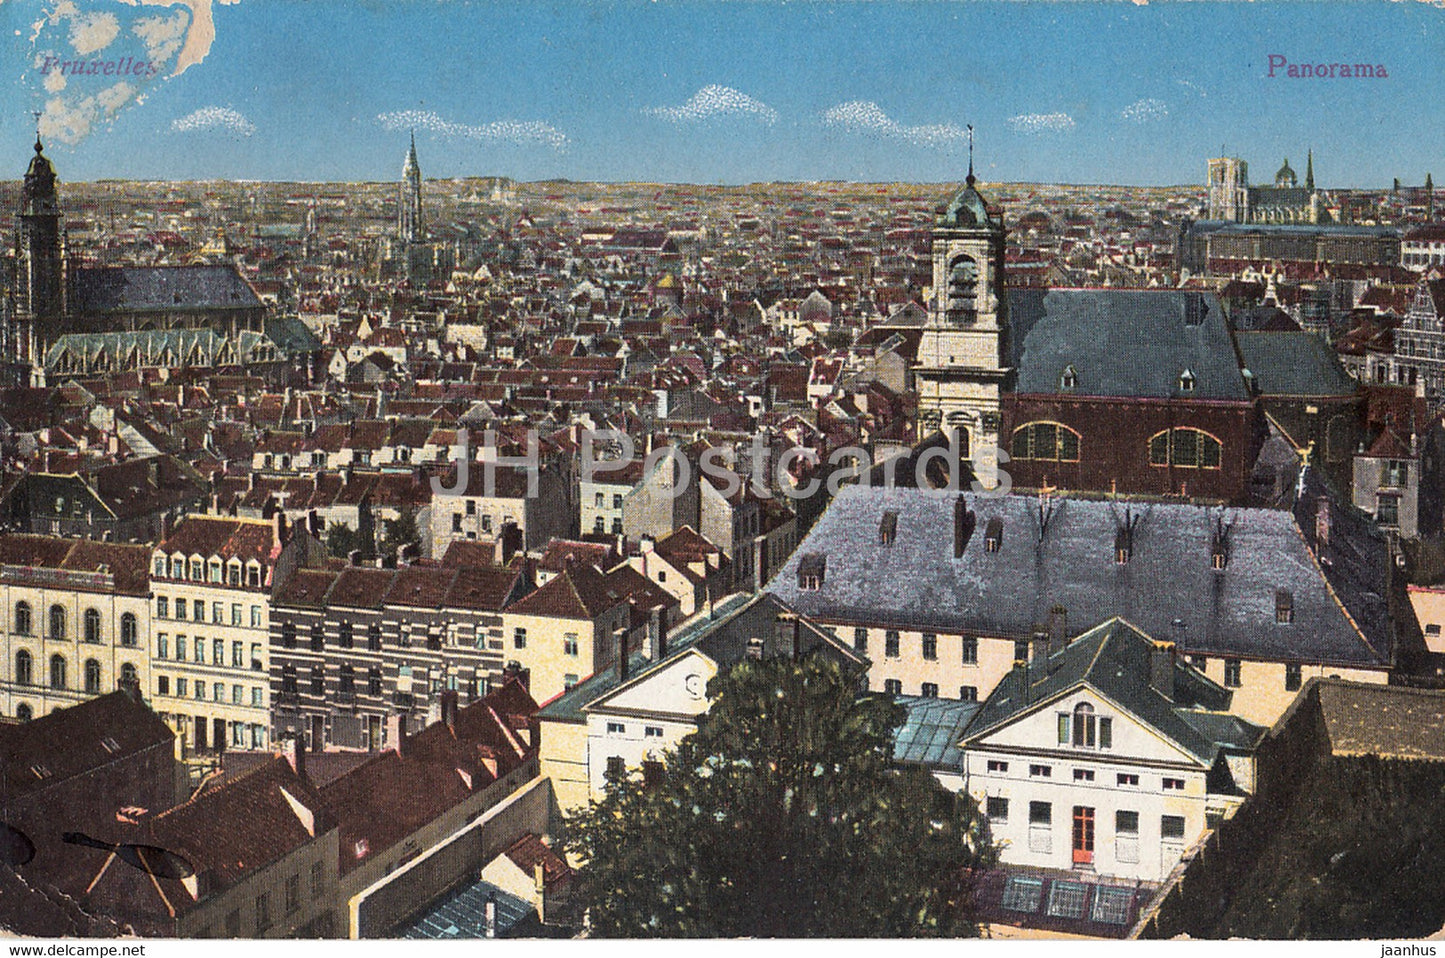 Bruxelles - Brussels - Panorama - Feldpost - old postcard - 1916 - Belgium - used - JH Postcards